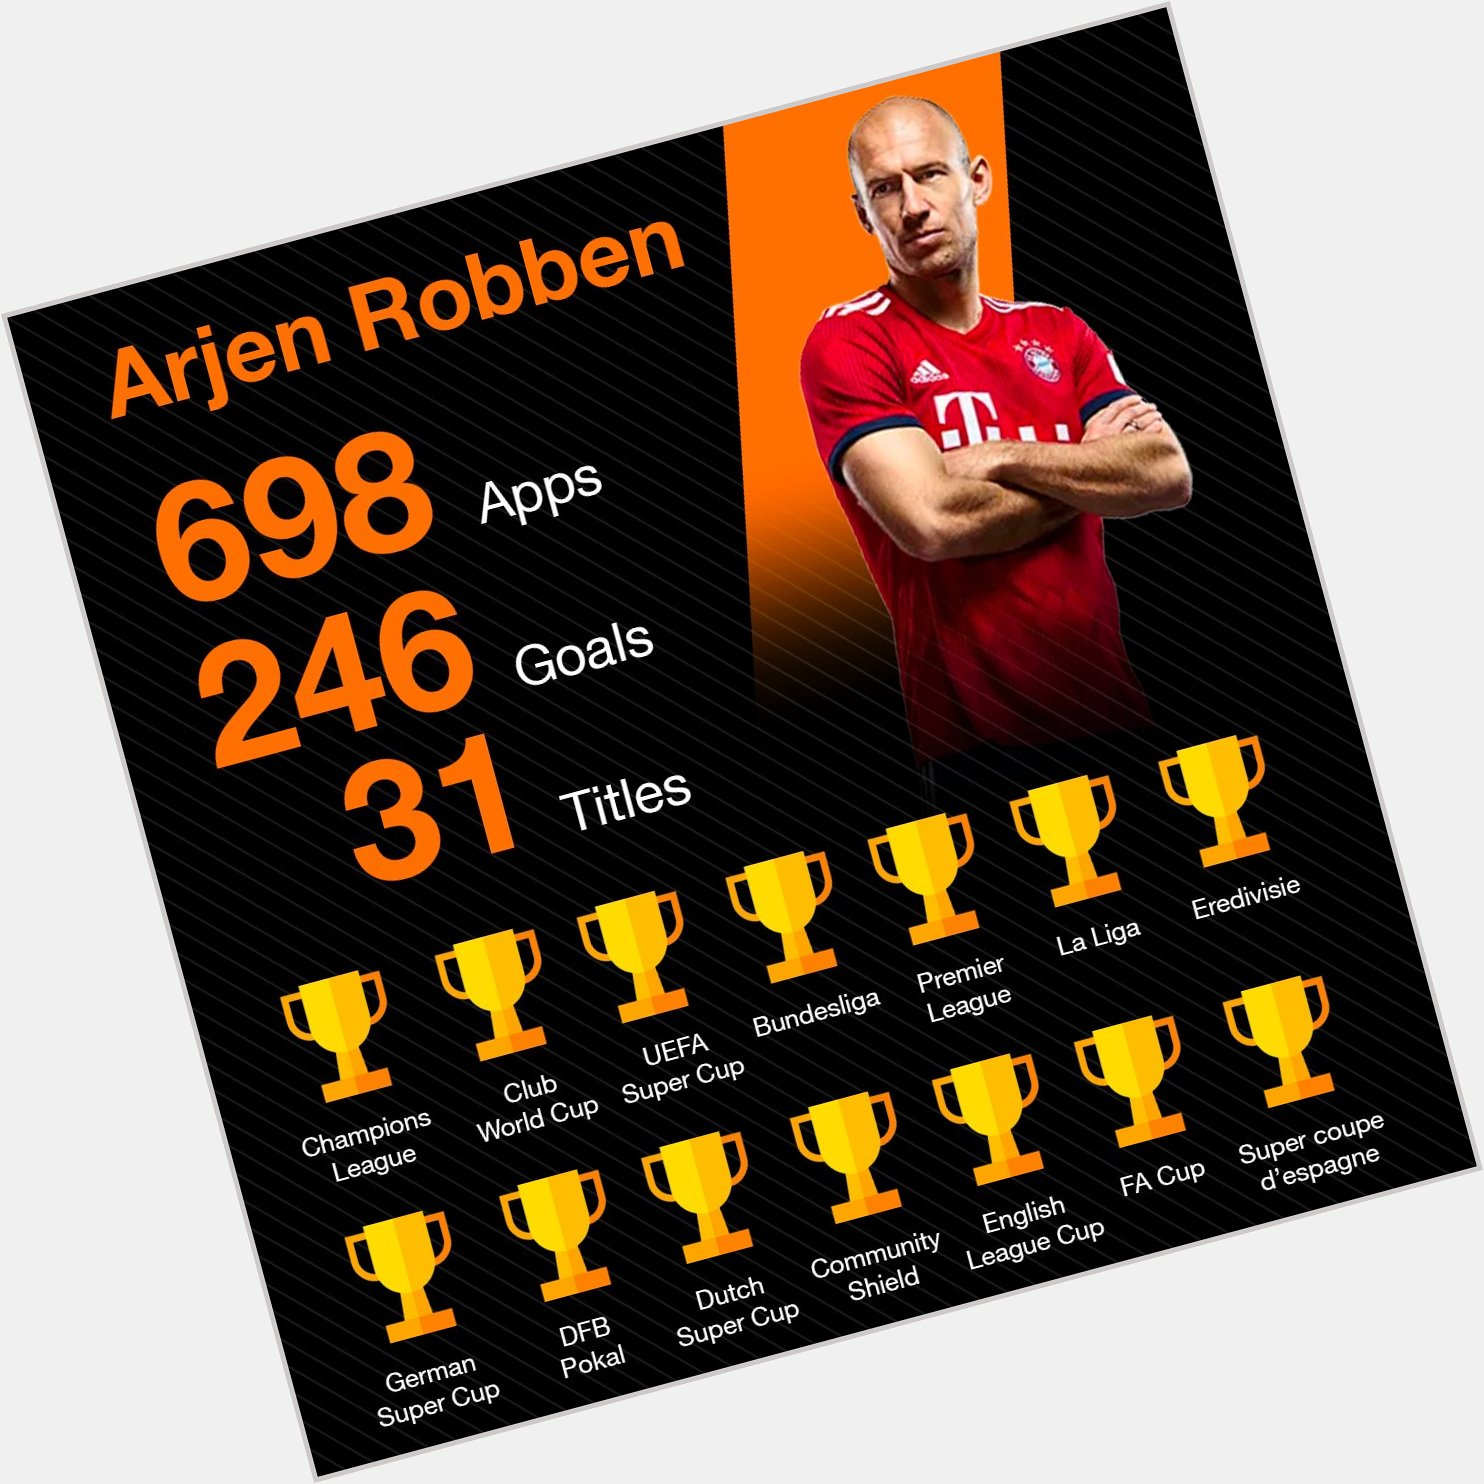 35 years, 31 team trophies, 23 individual prizes. Happy birthday Arjen Robben. 